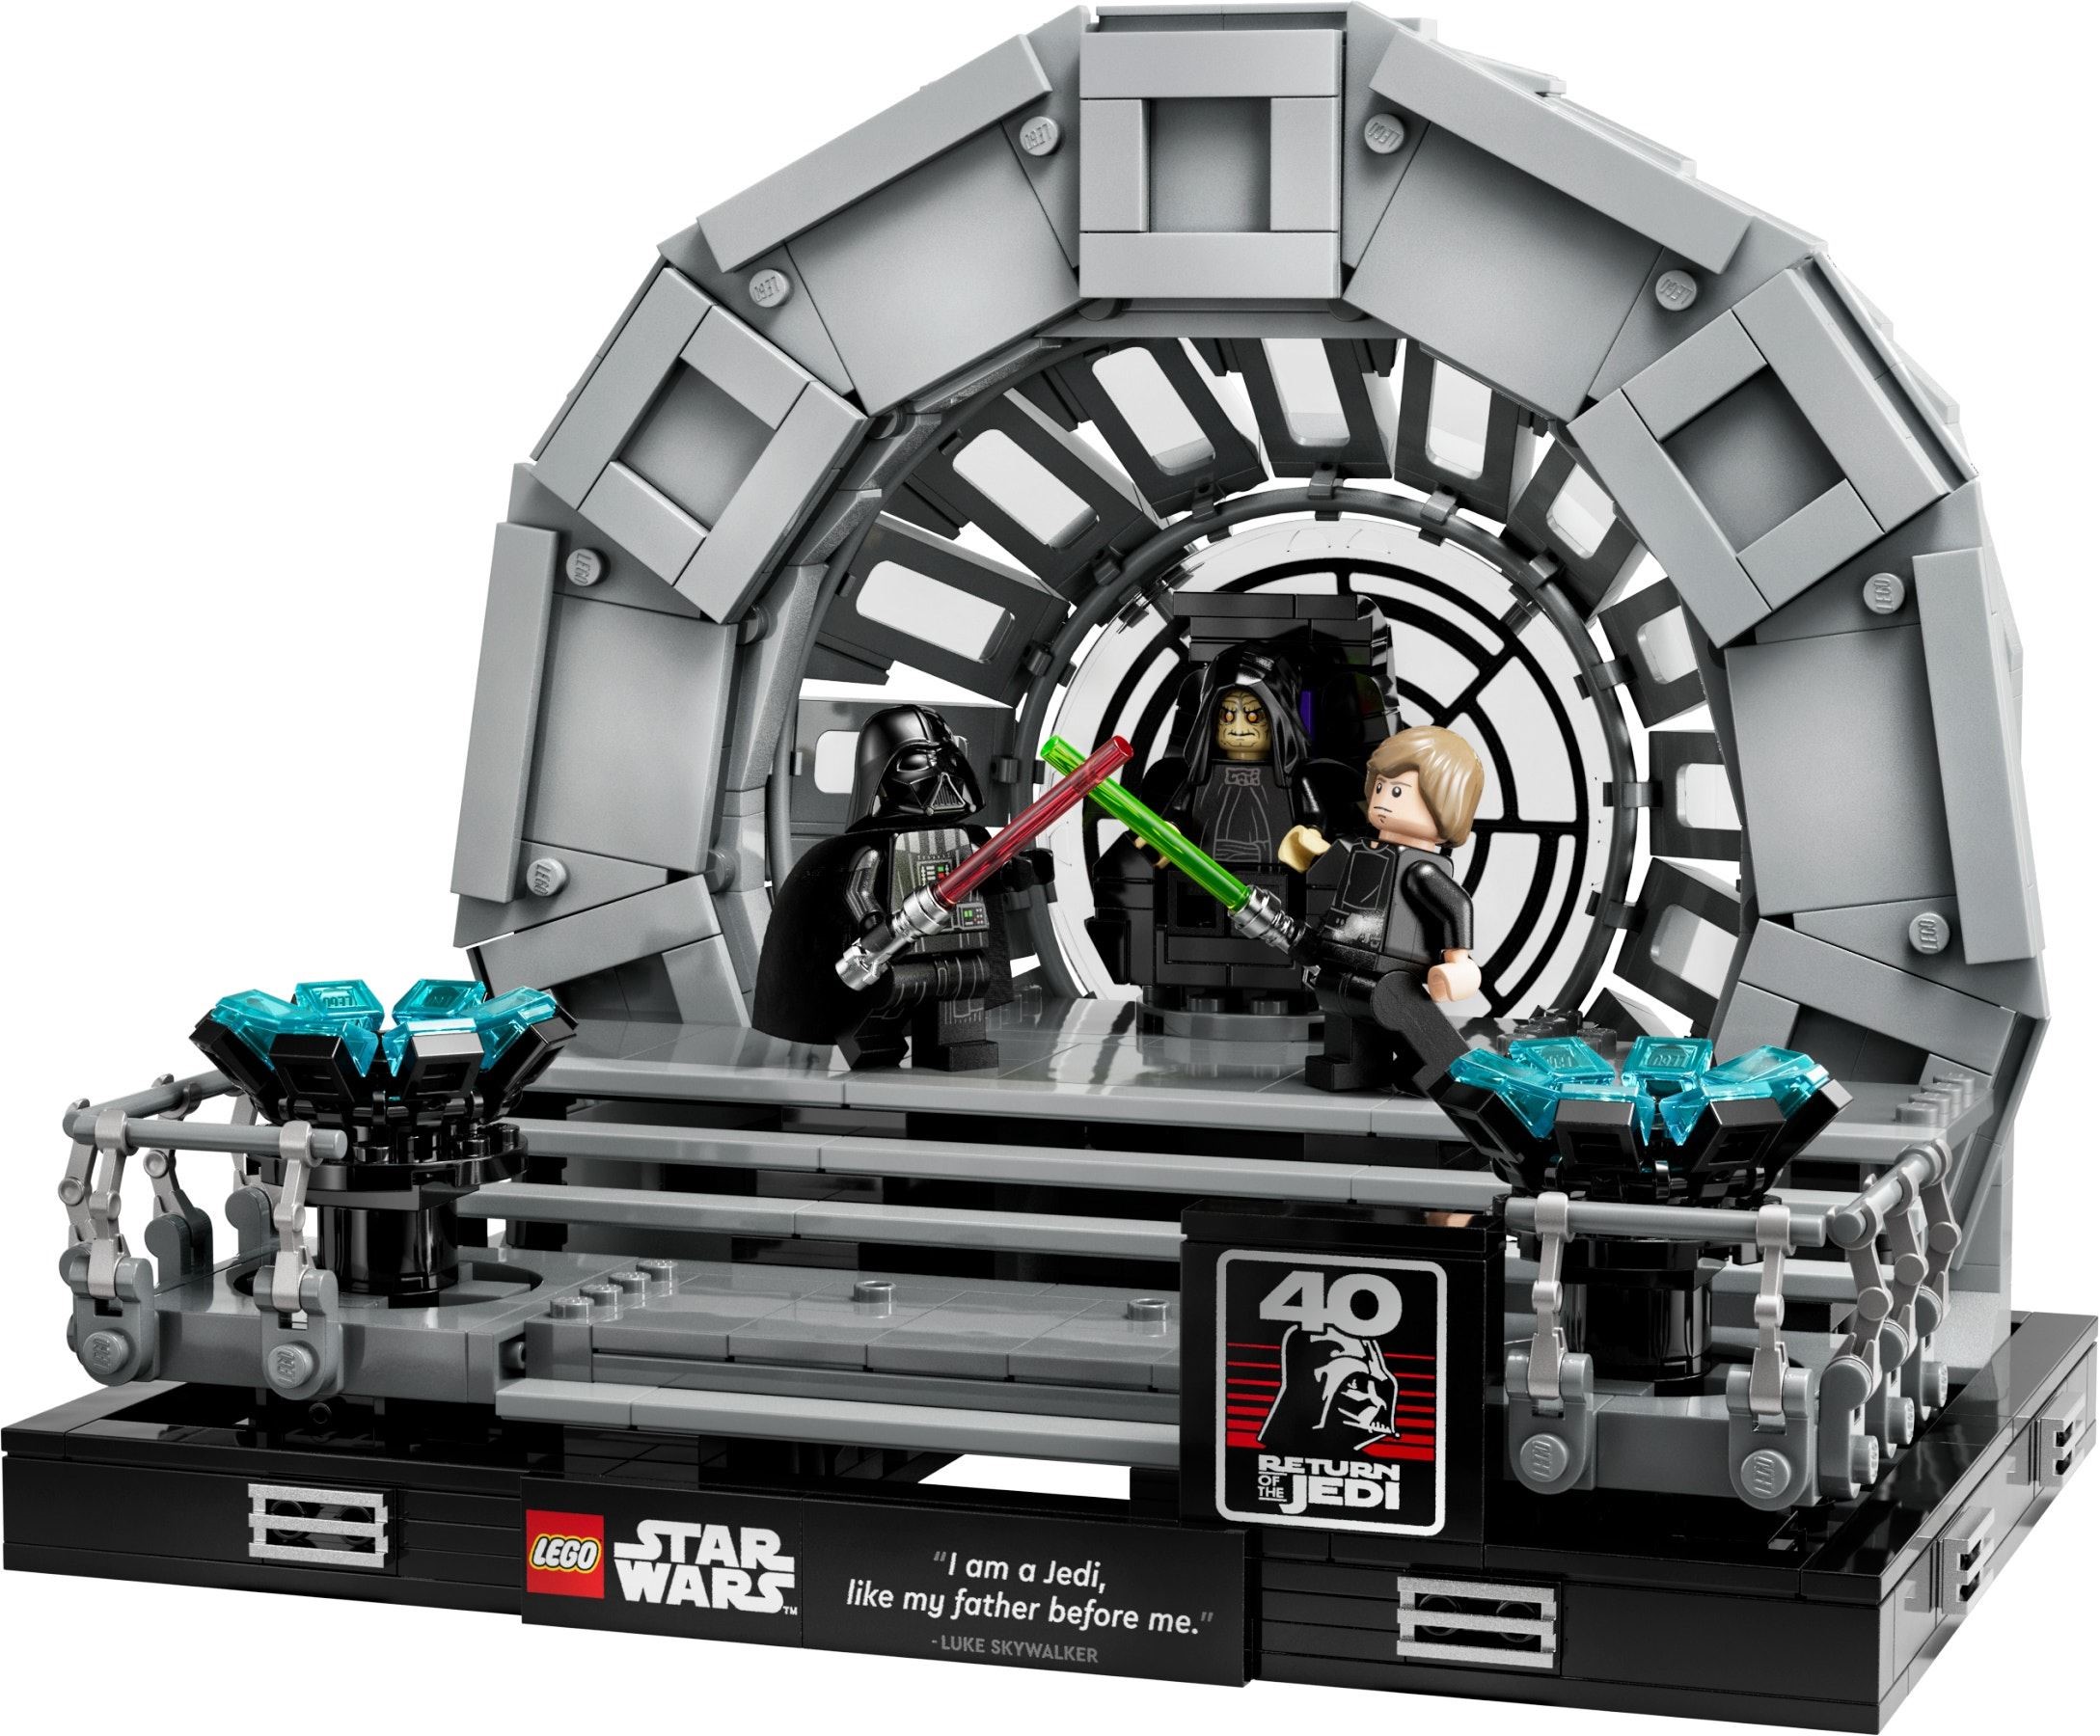 Star Wars diorama - LEGO Ambassador Network Albums - LEGO